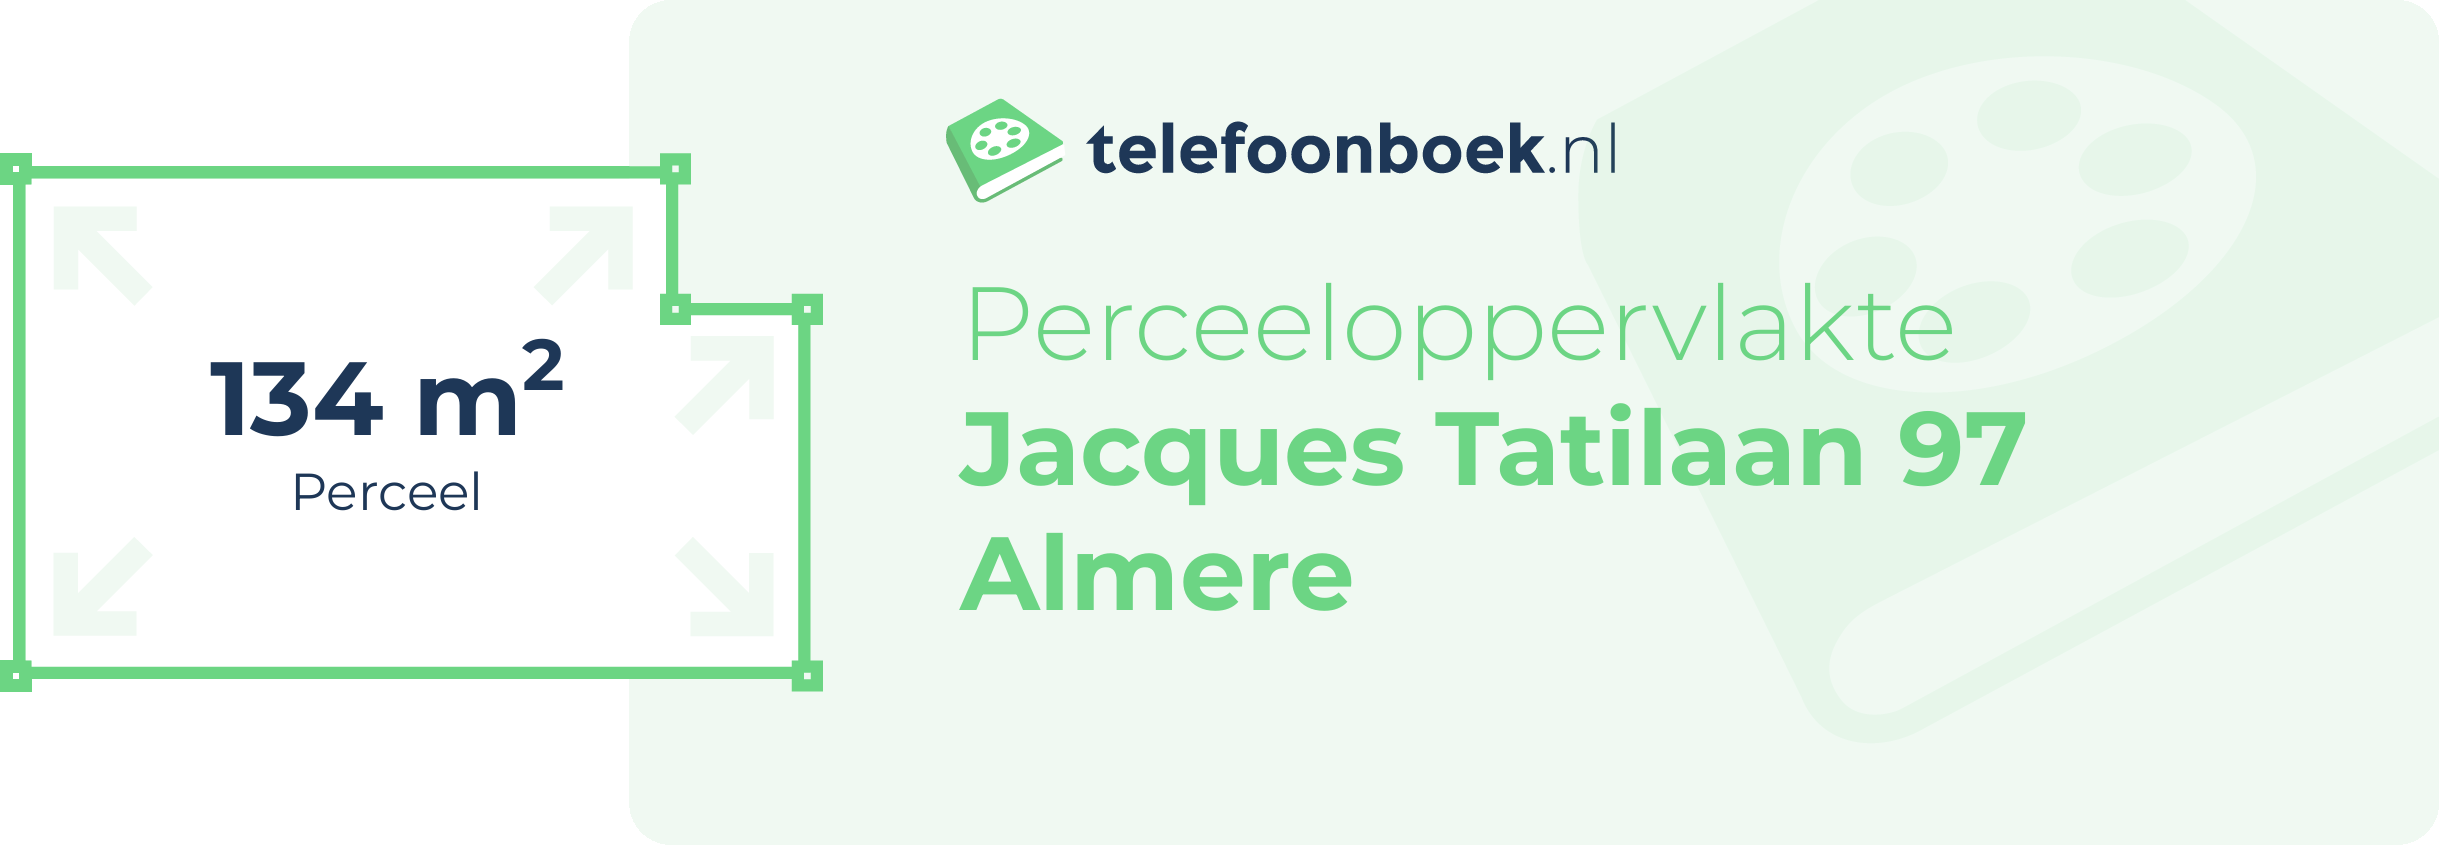 Perceeloppervlakte Jacques Tatilaan 97 Almere